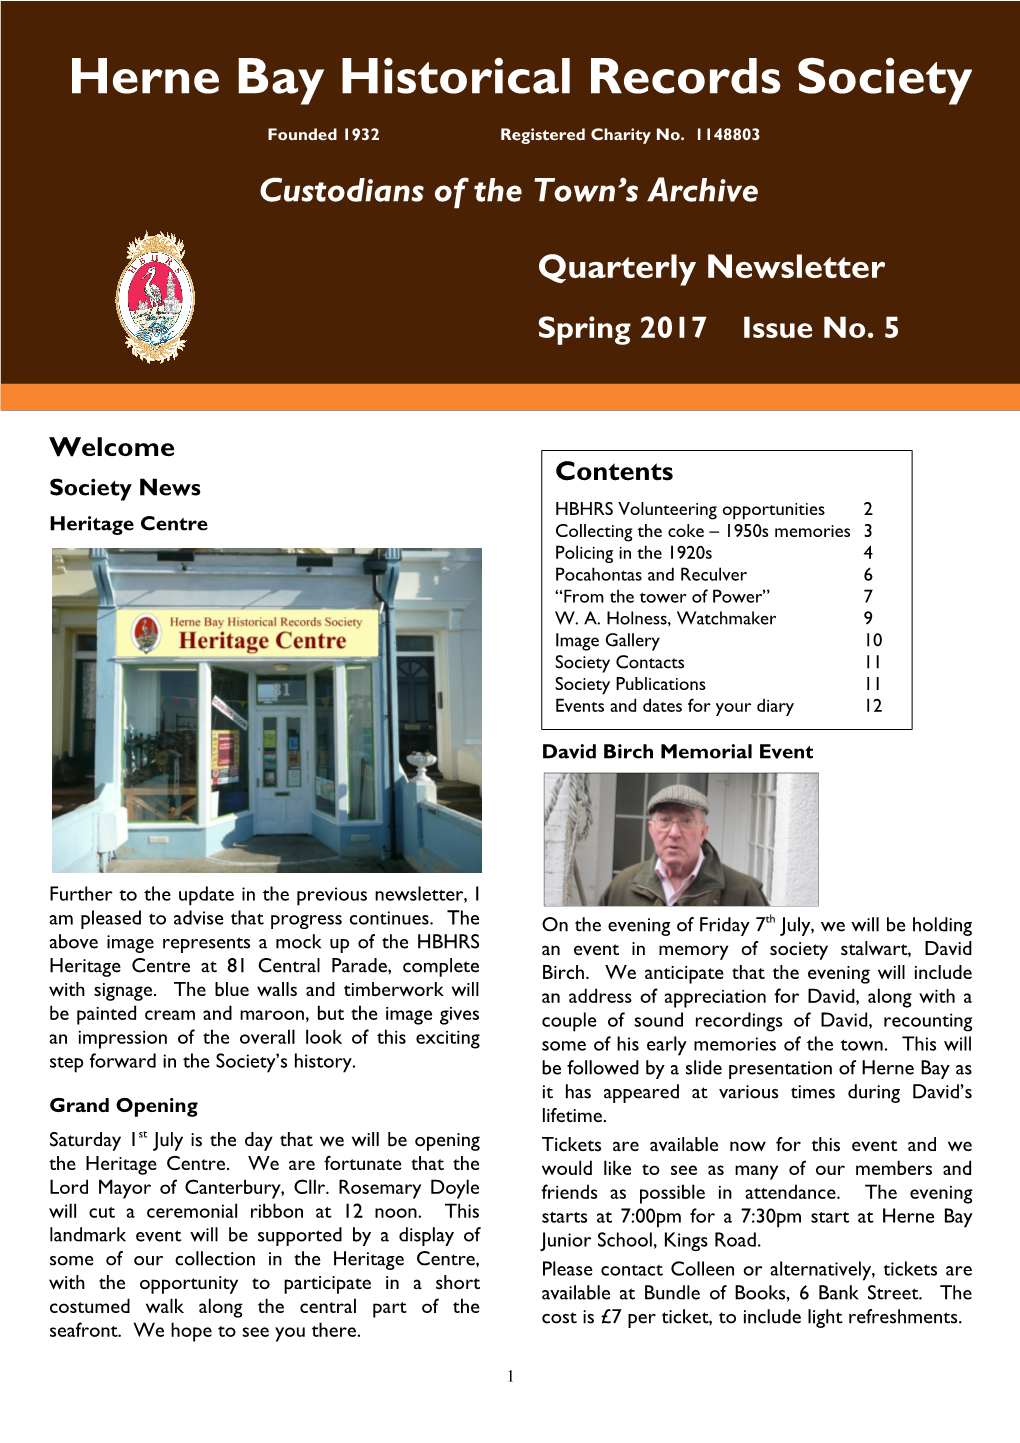 Quarterly Newsletter Spring 2017 Issue No. 5 Erne Bay Historical